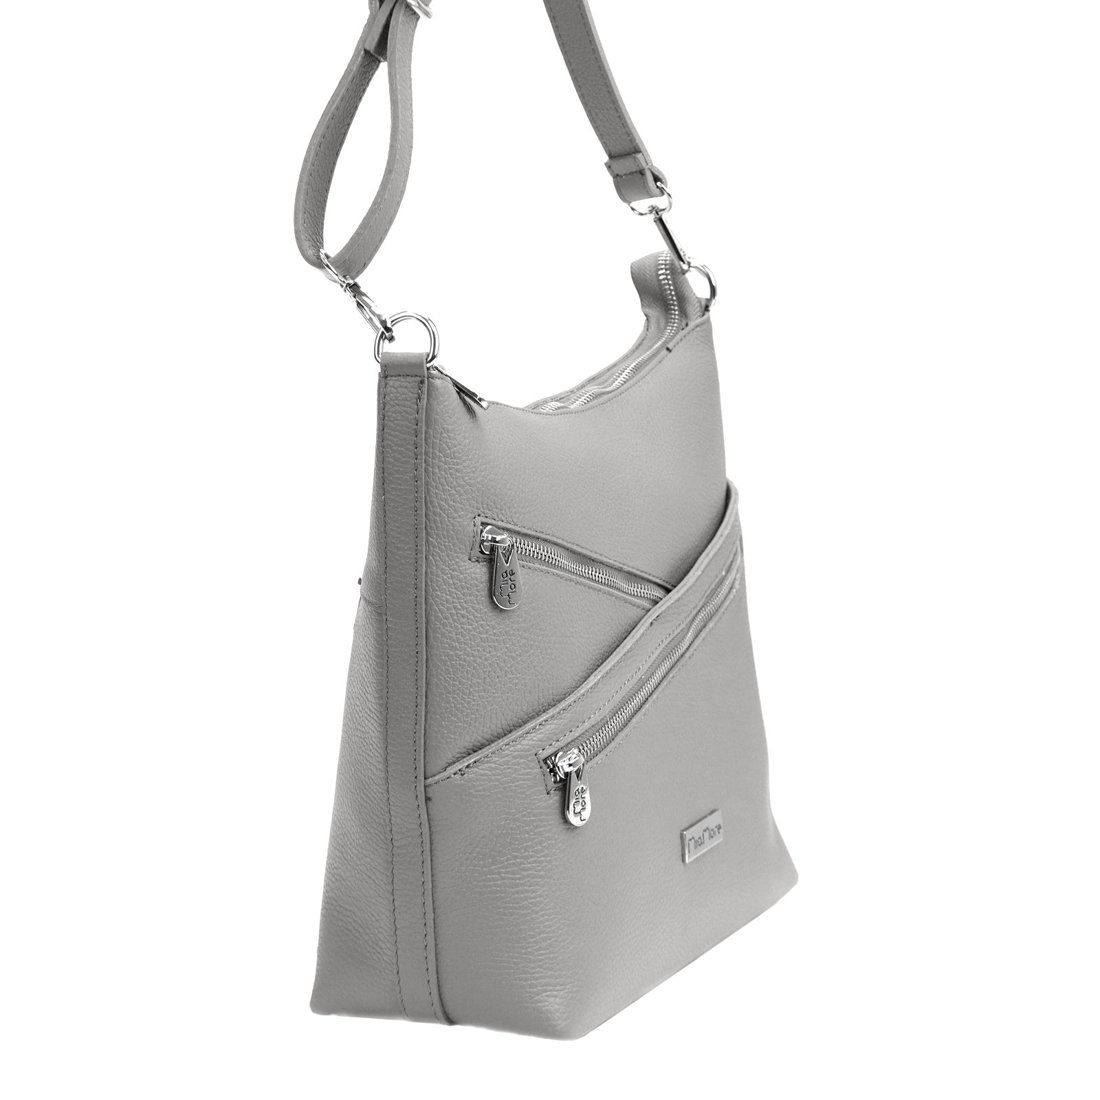 Women's natural leather handbag MiaMore 01-033 DOLLARO